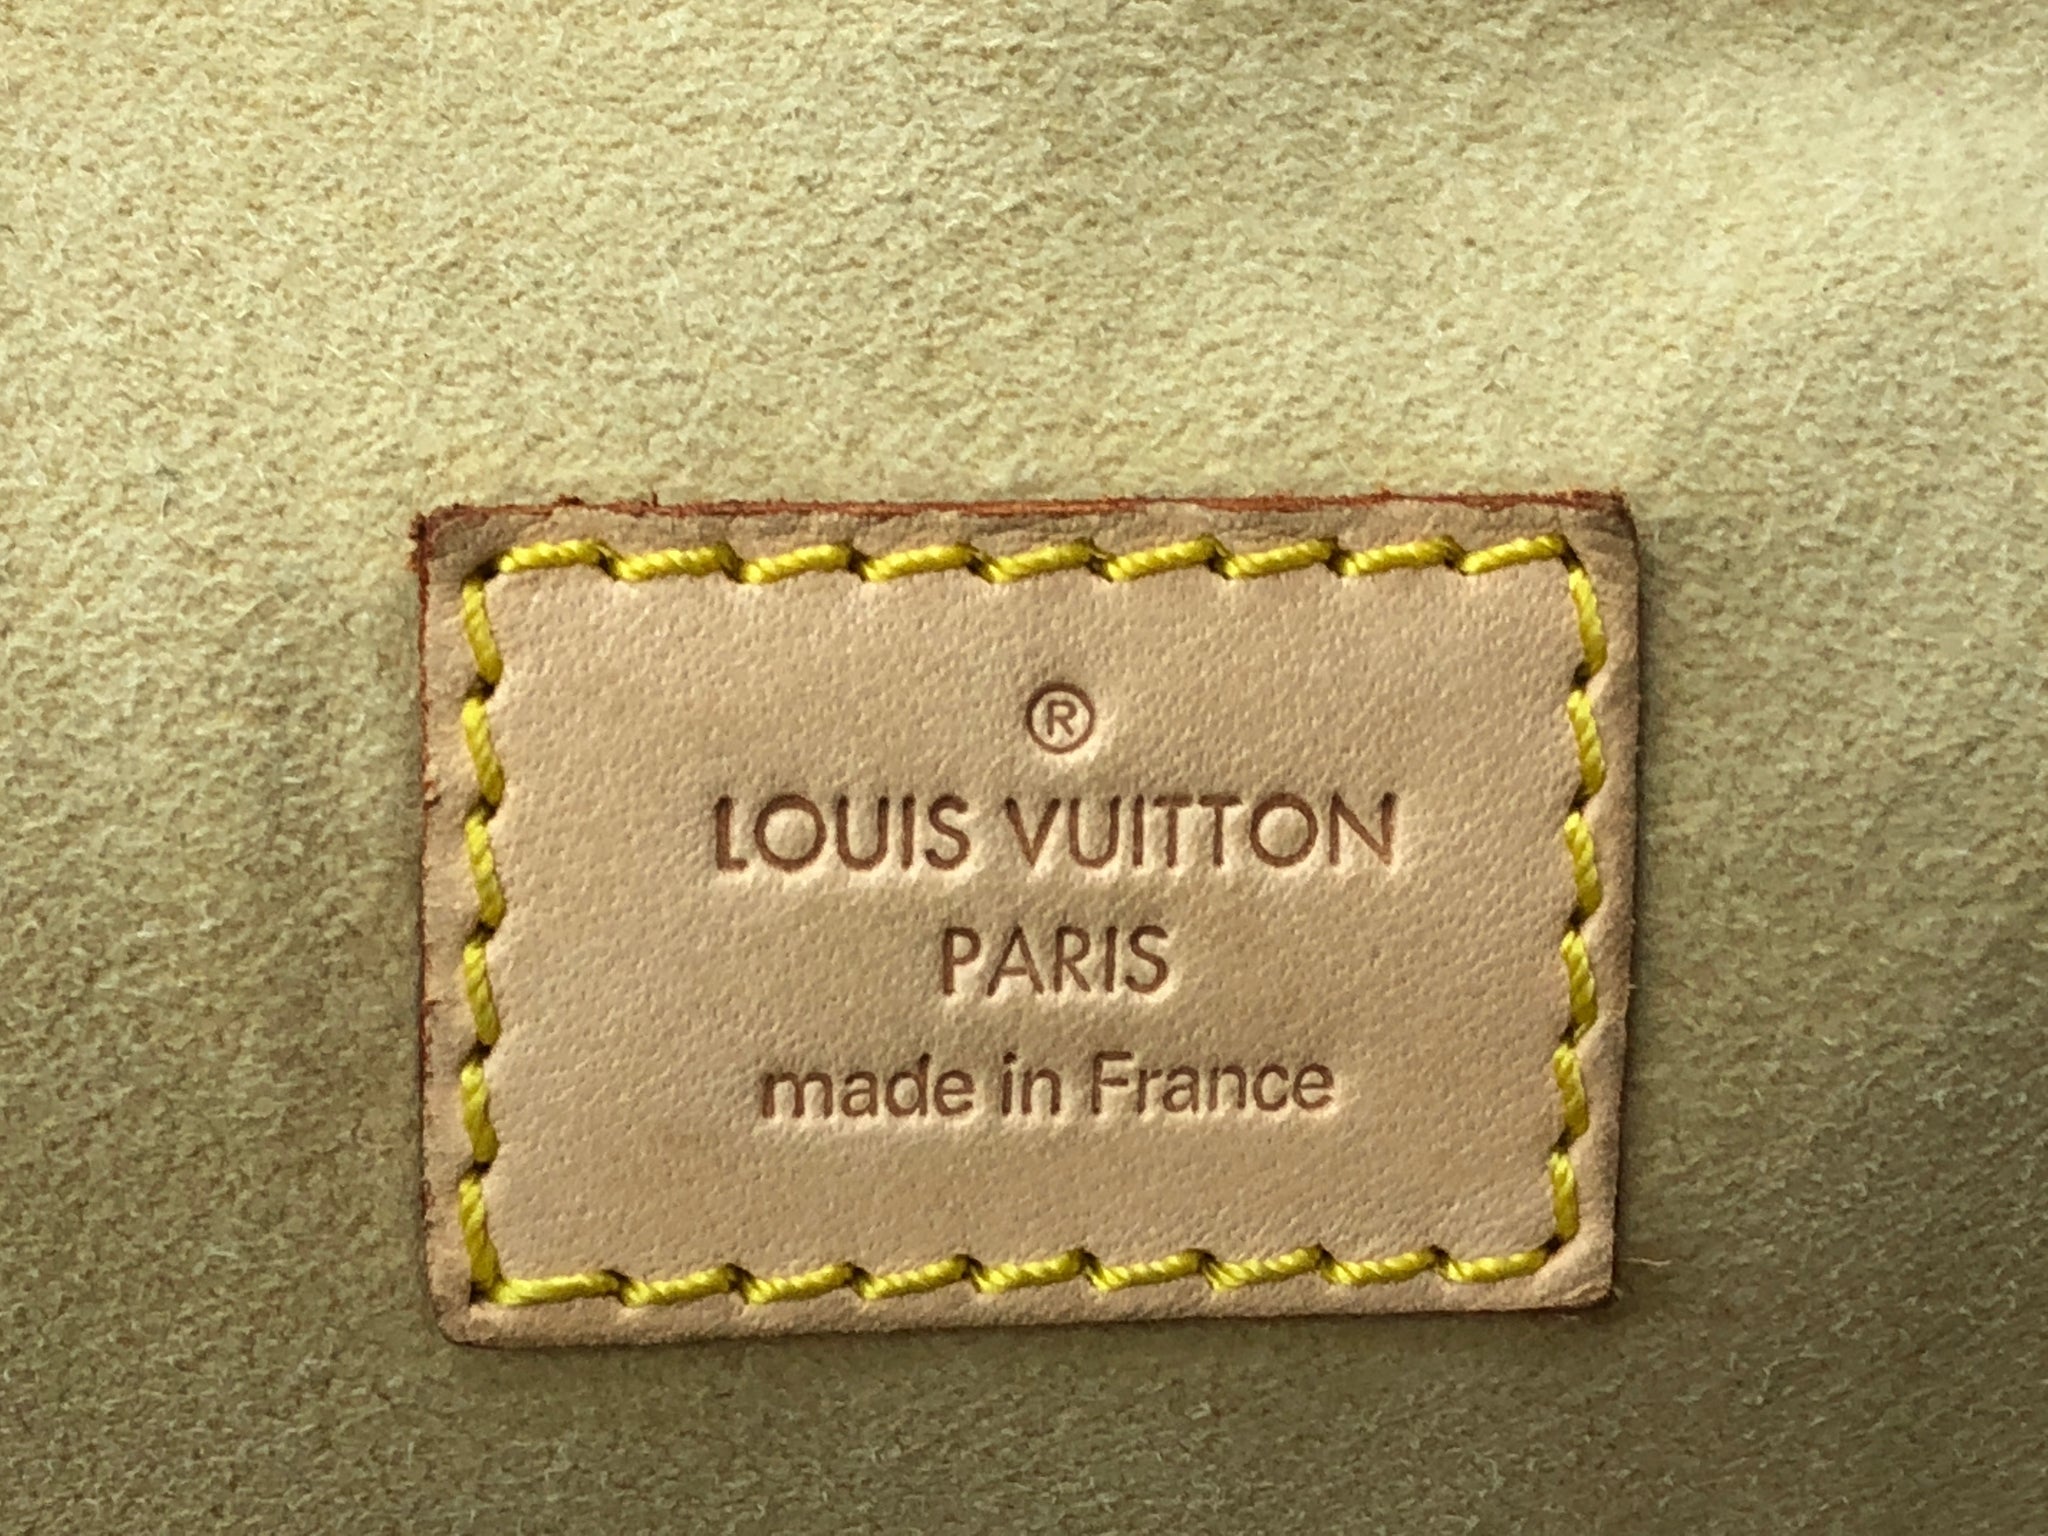 Louis Vuitton, Bags, Louis Vuitton Manhattan Gm Jessica Simpson Favorite